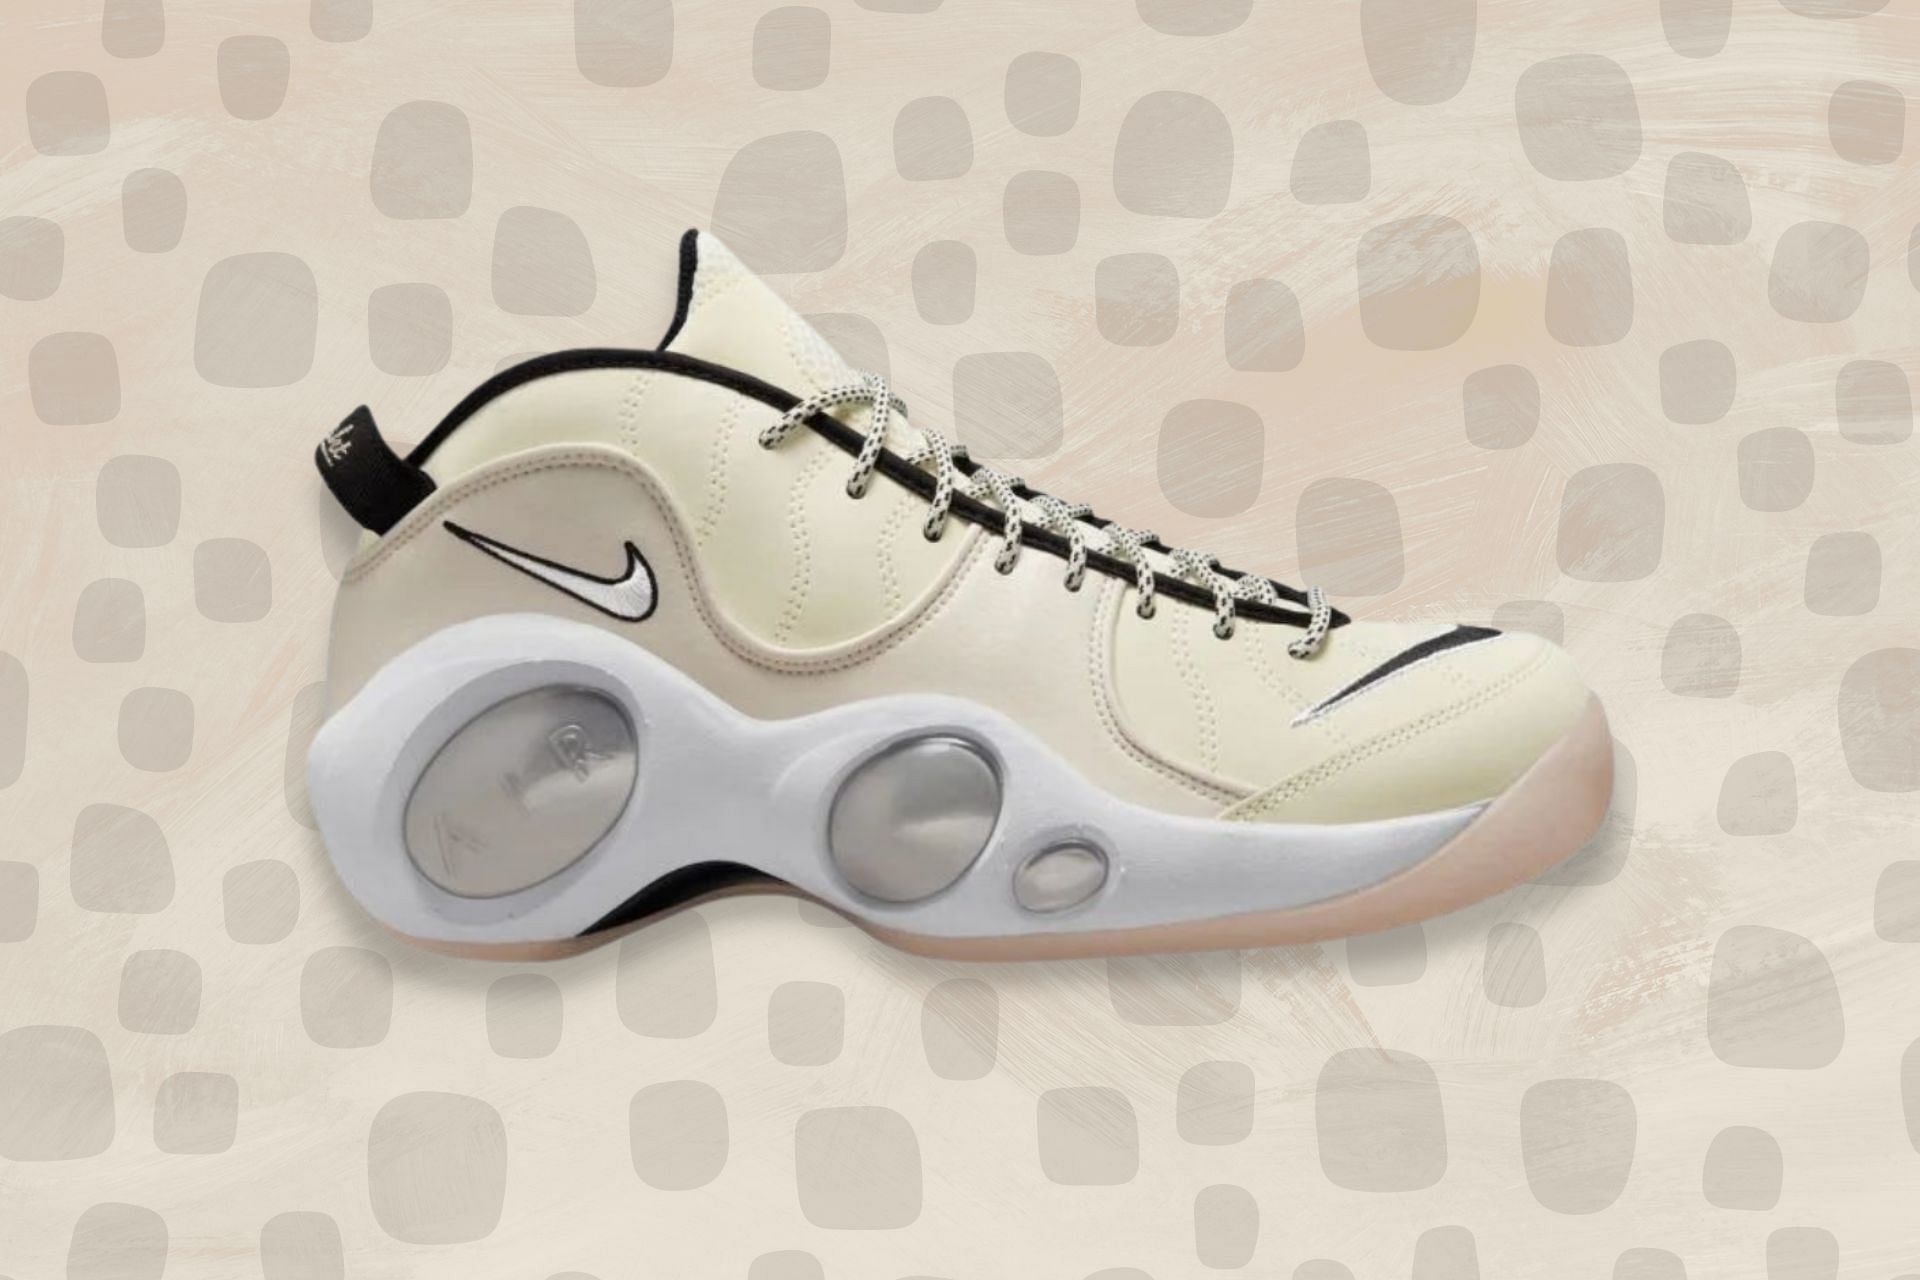 Nike Air Zoom Flight 95 Pale Ivory shoes (Image via Nike)